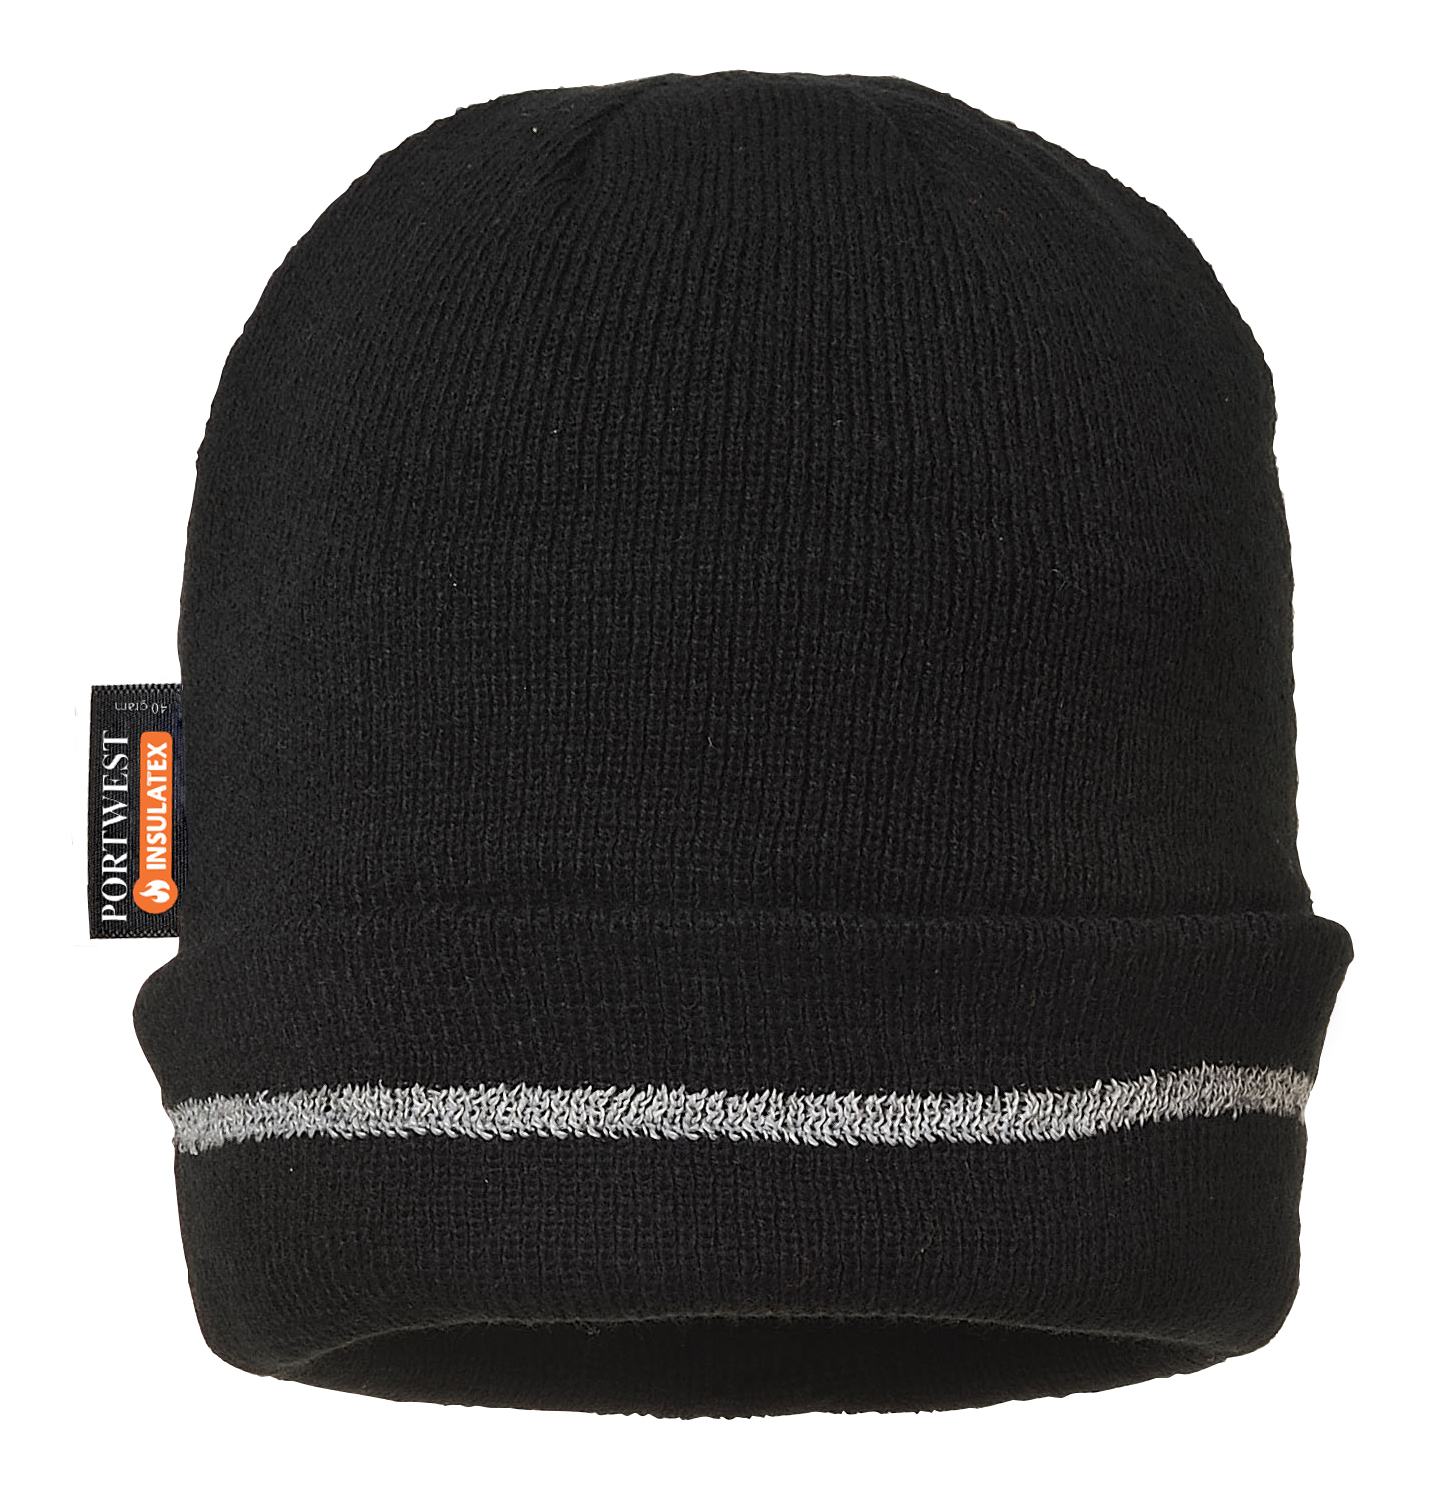 JW WorkZone Supplies LLC. portwest - reflective trim knit hat insulatex ...